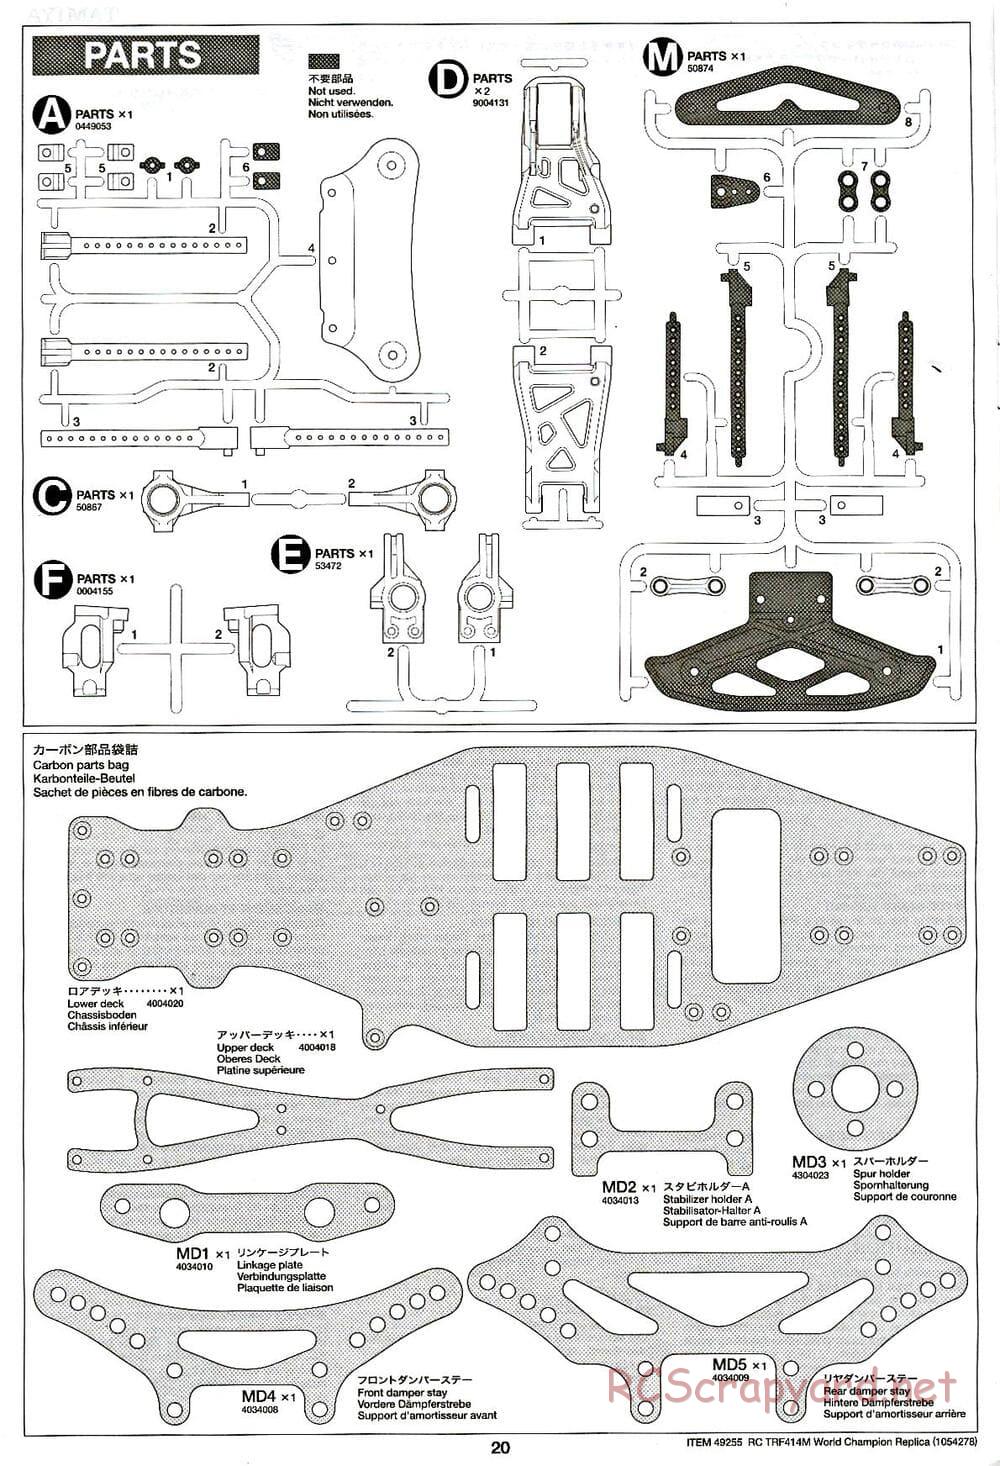 Tamiya - TRF414M World Champion Replica Chassis - Manual - Page 20